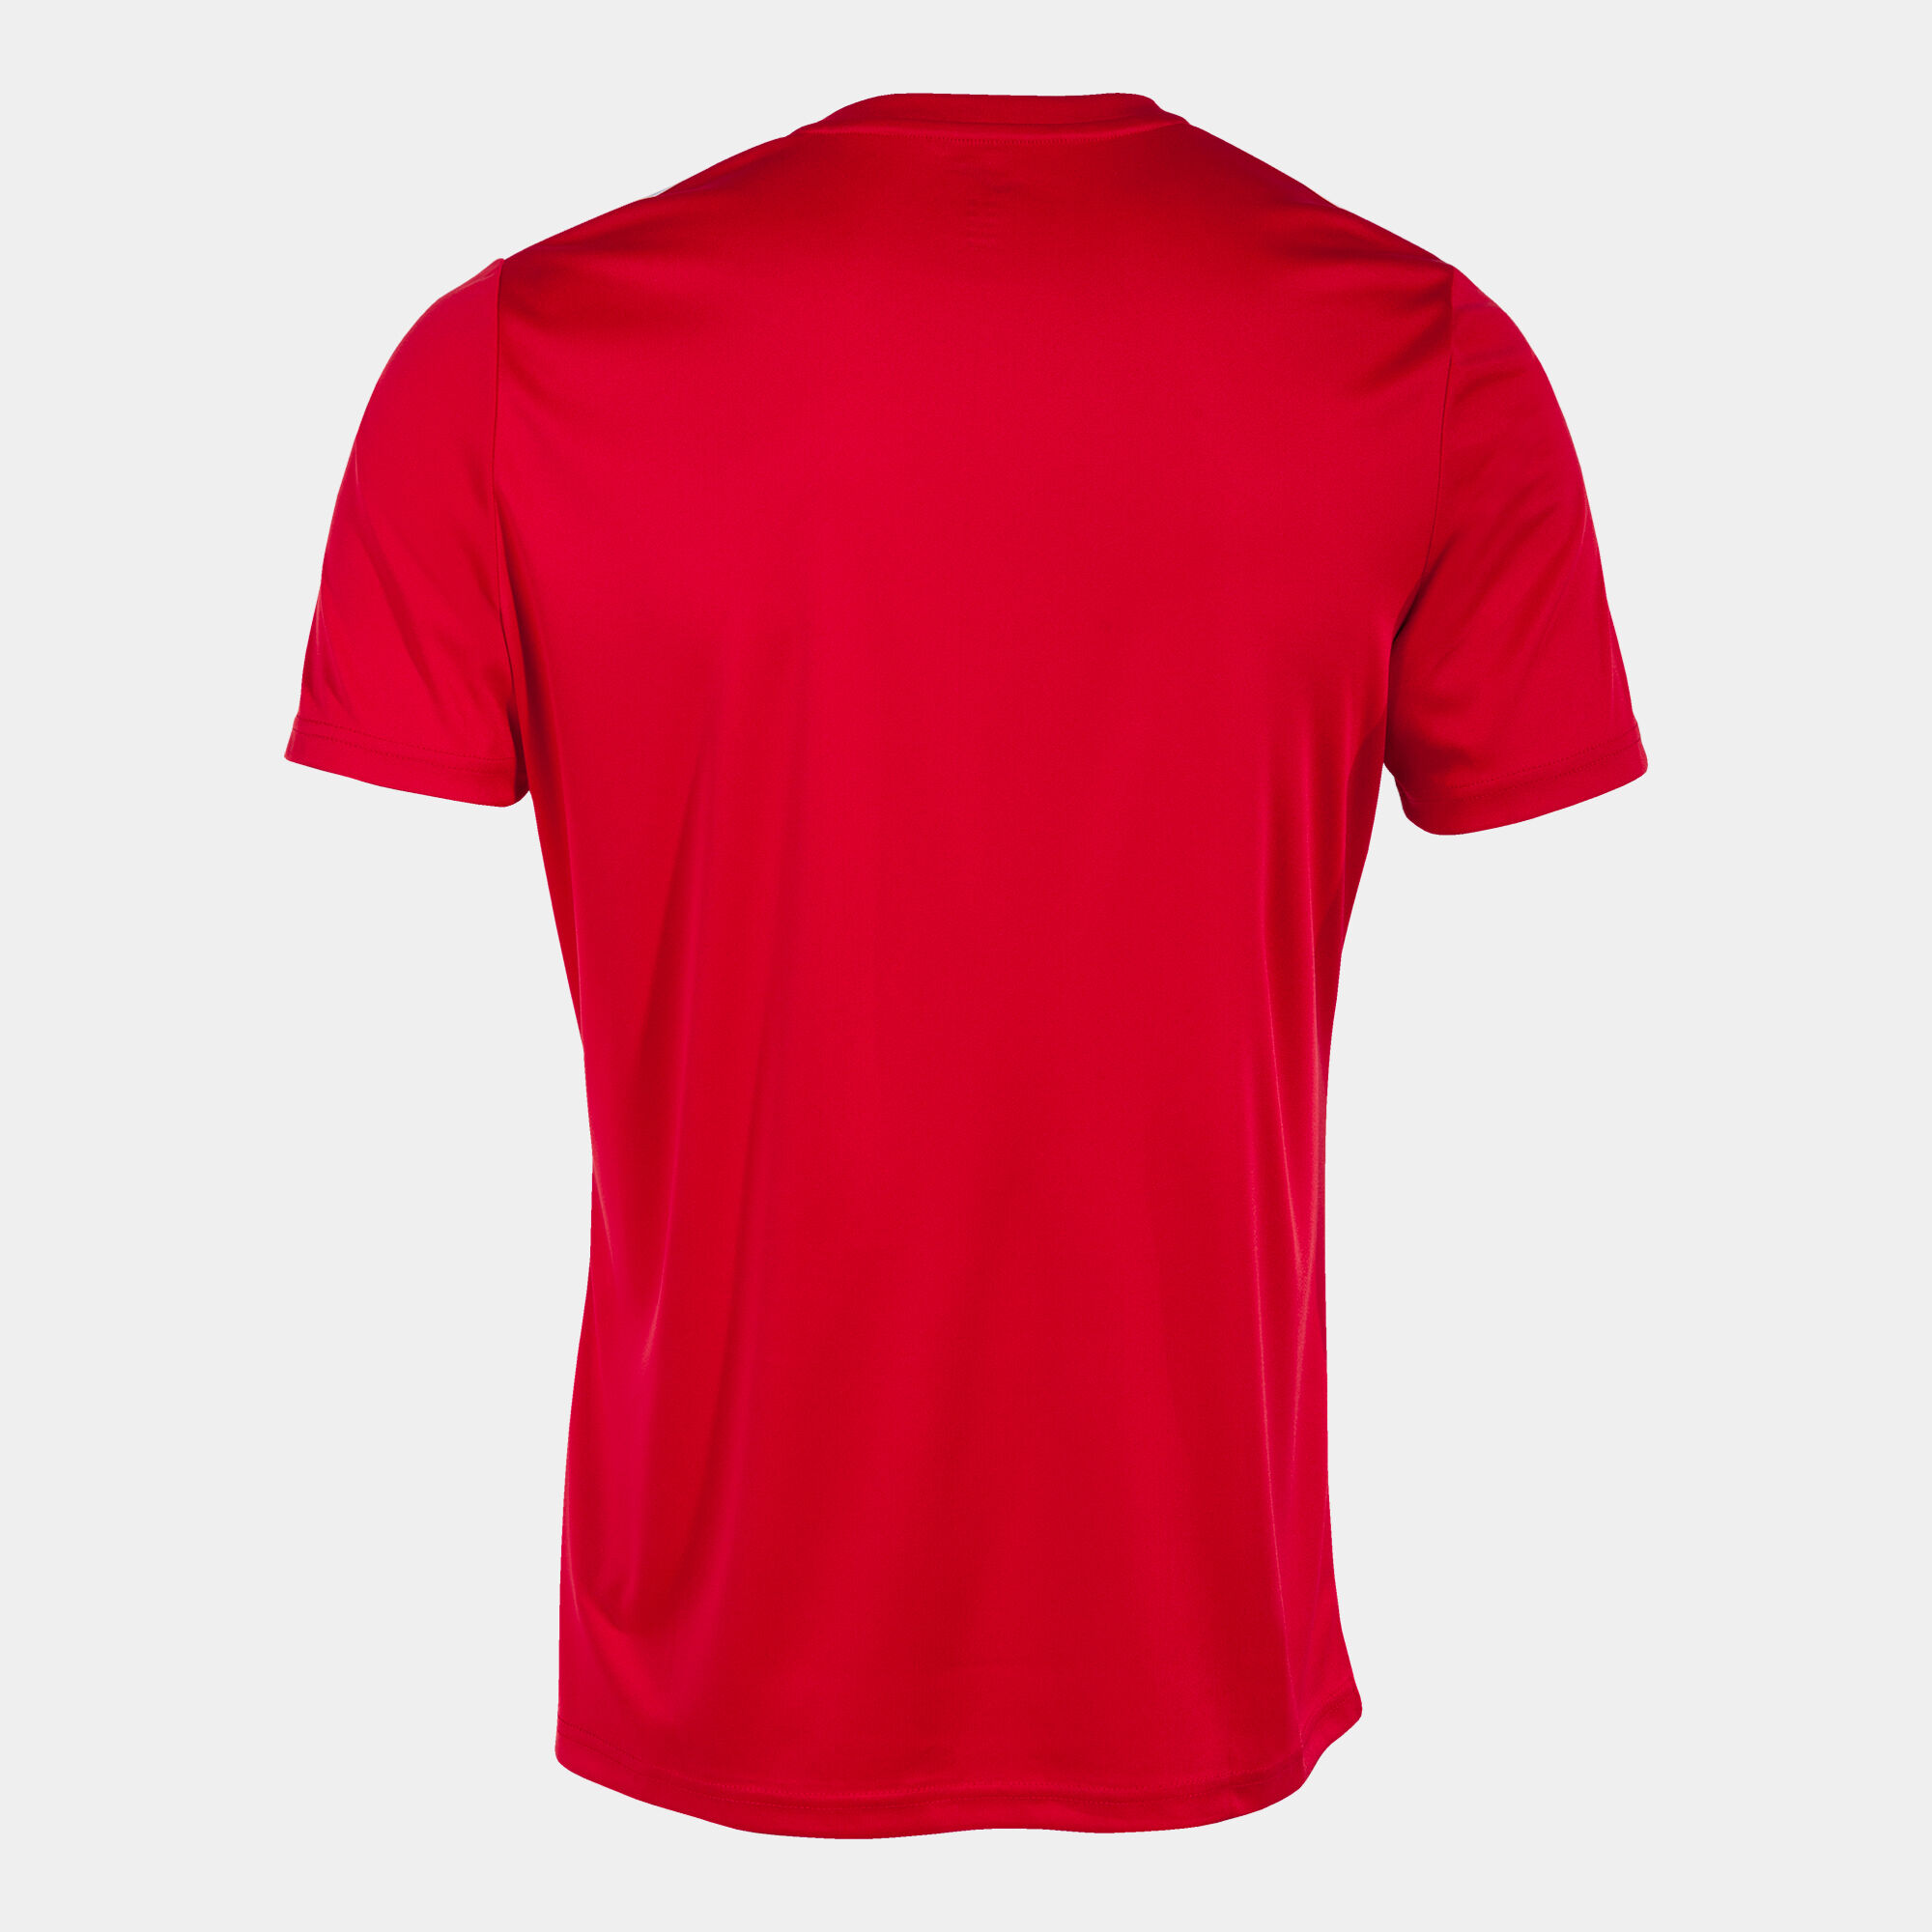 Camiseta manga corta hombre Inter III rojo blanco